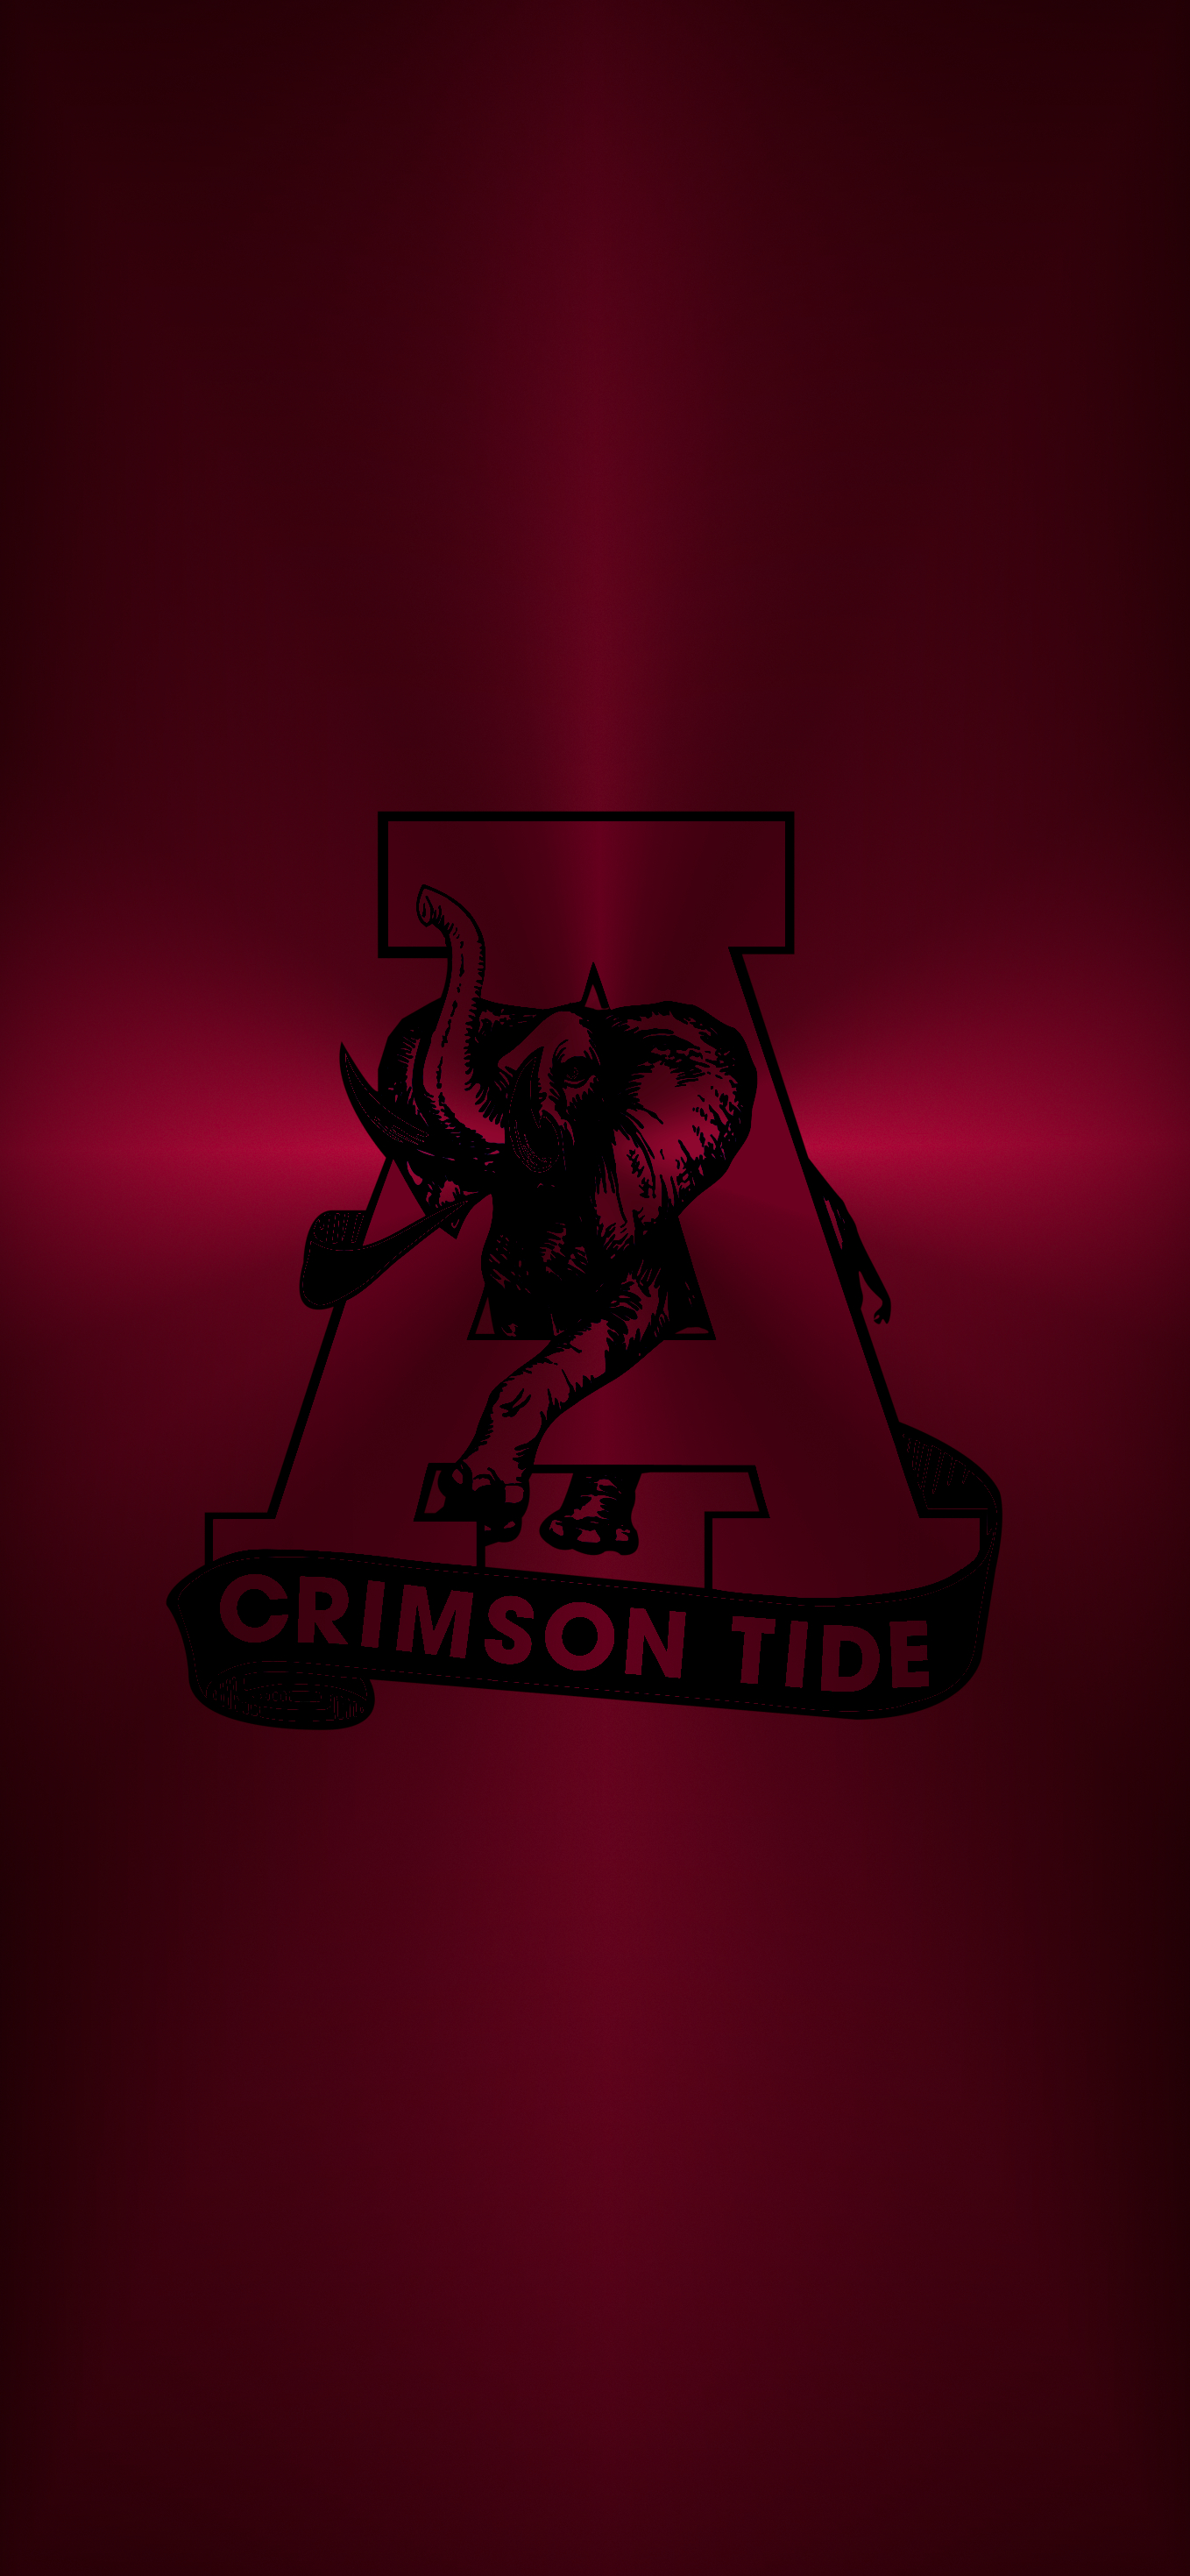 1358x2939 bama logo 11 Metal | Alabama crimson tide football, Crimson tide, Alabama crimson tide log